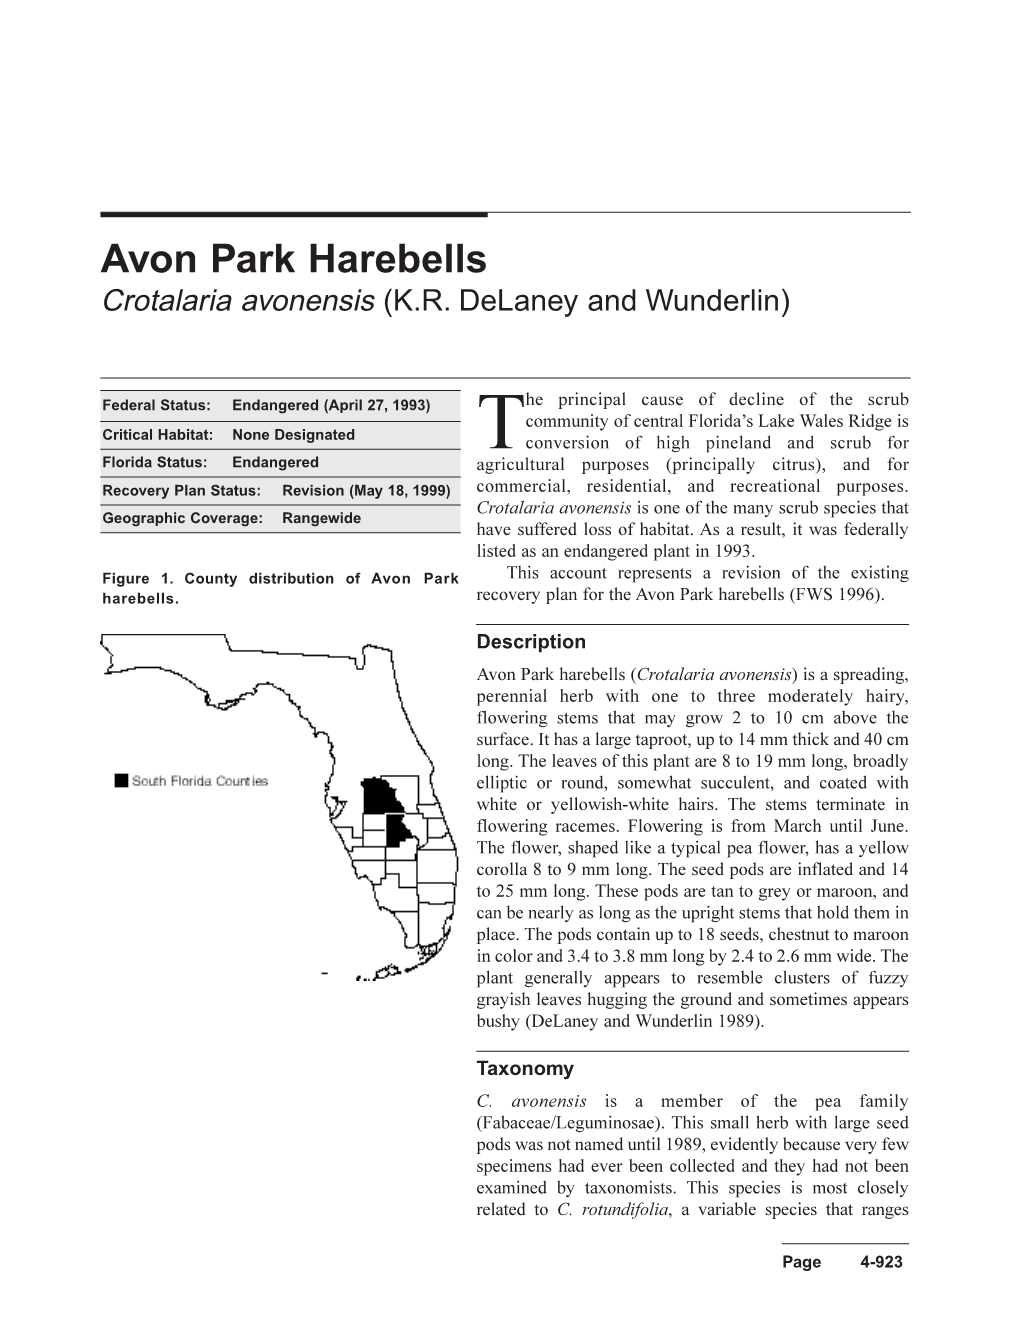 Avon Park Harebells Crotalaria Avonensis (K.R